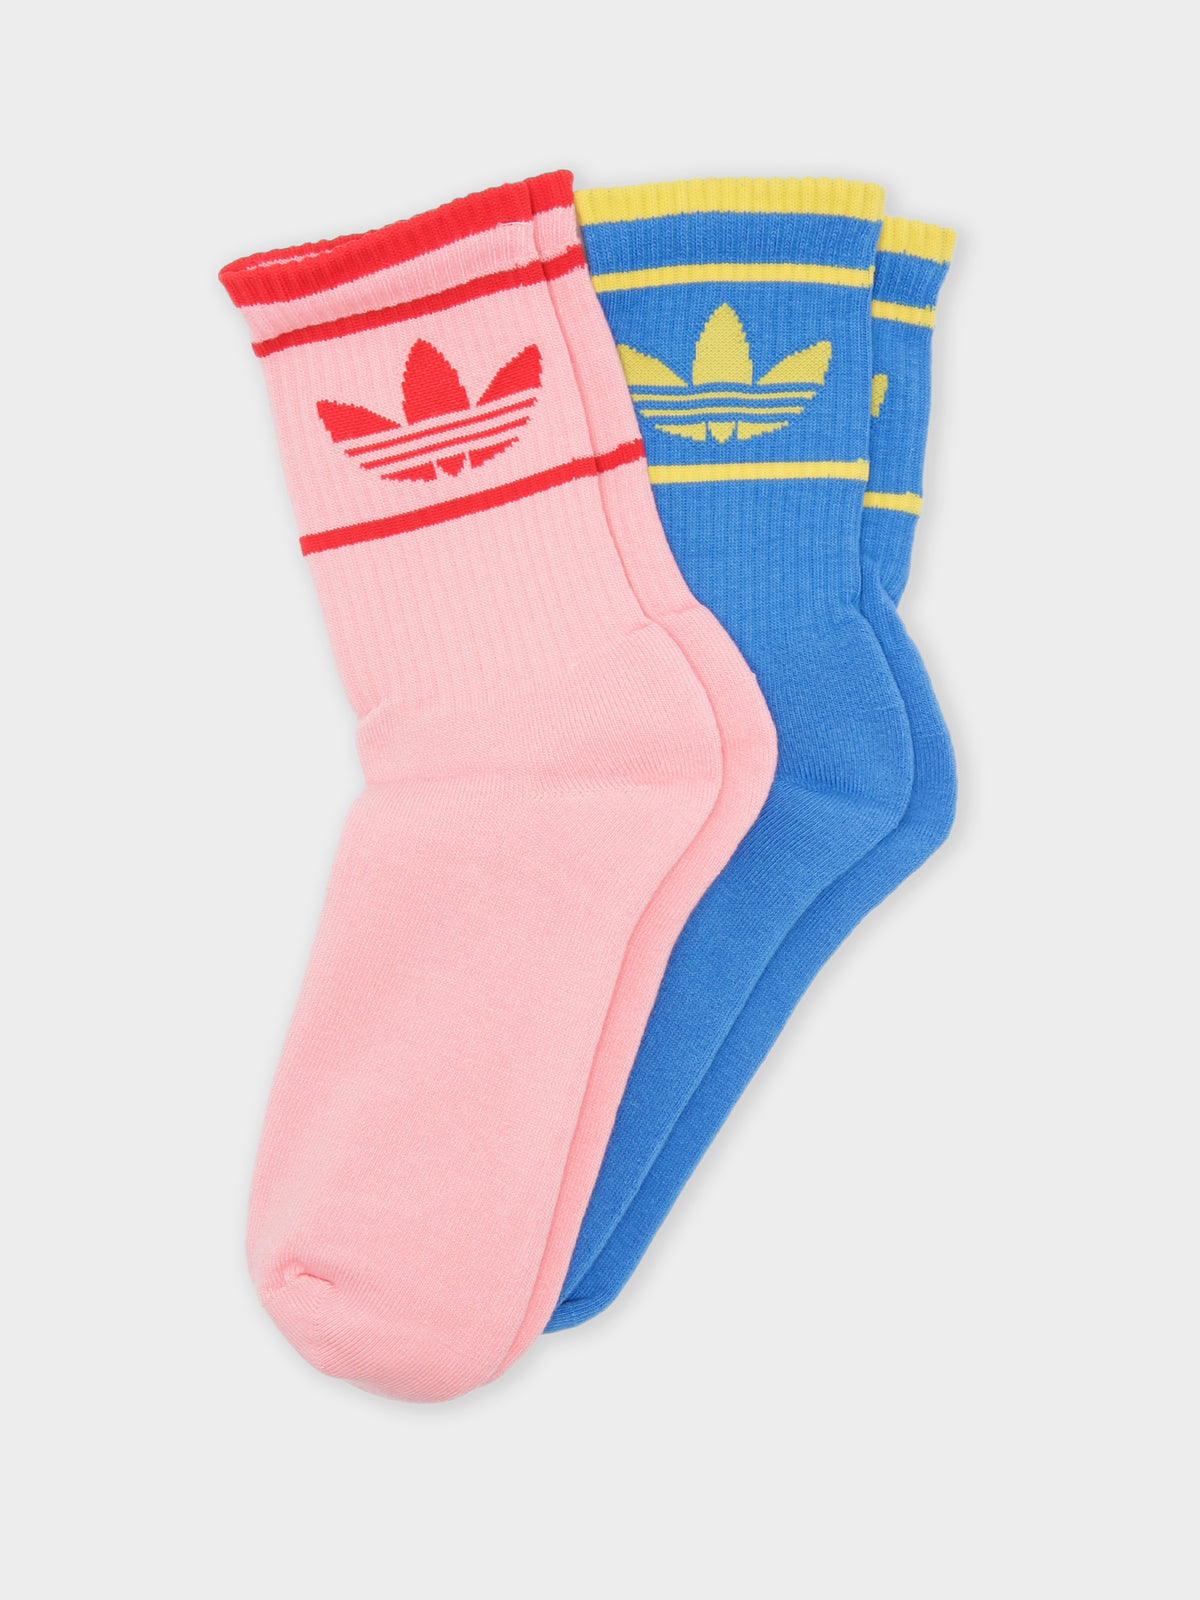 Two Pairs of ADICOLOR 70s Crew Socks in Superpop Pink &amp; Bluebird Blue